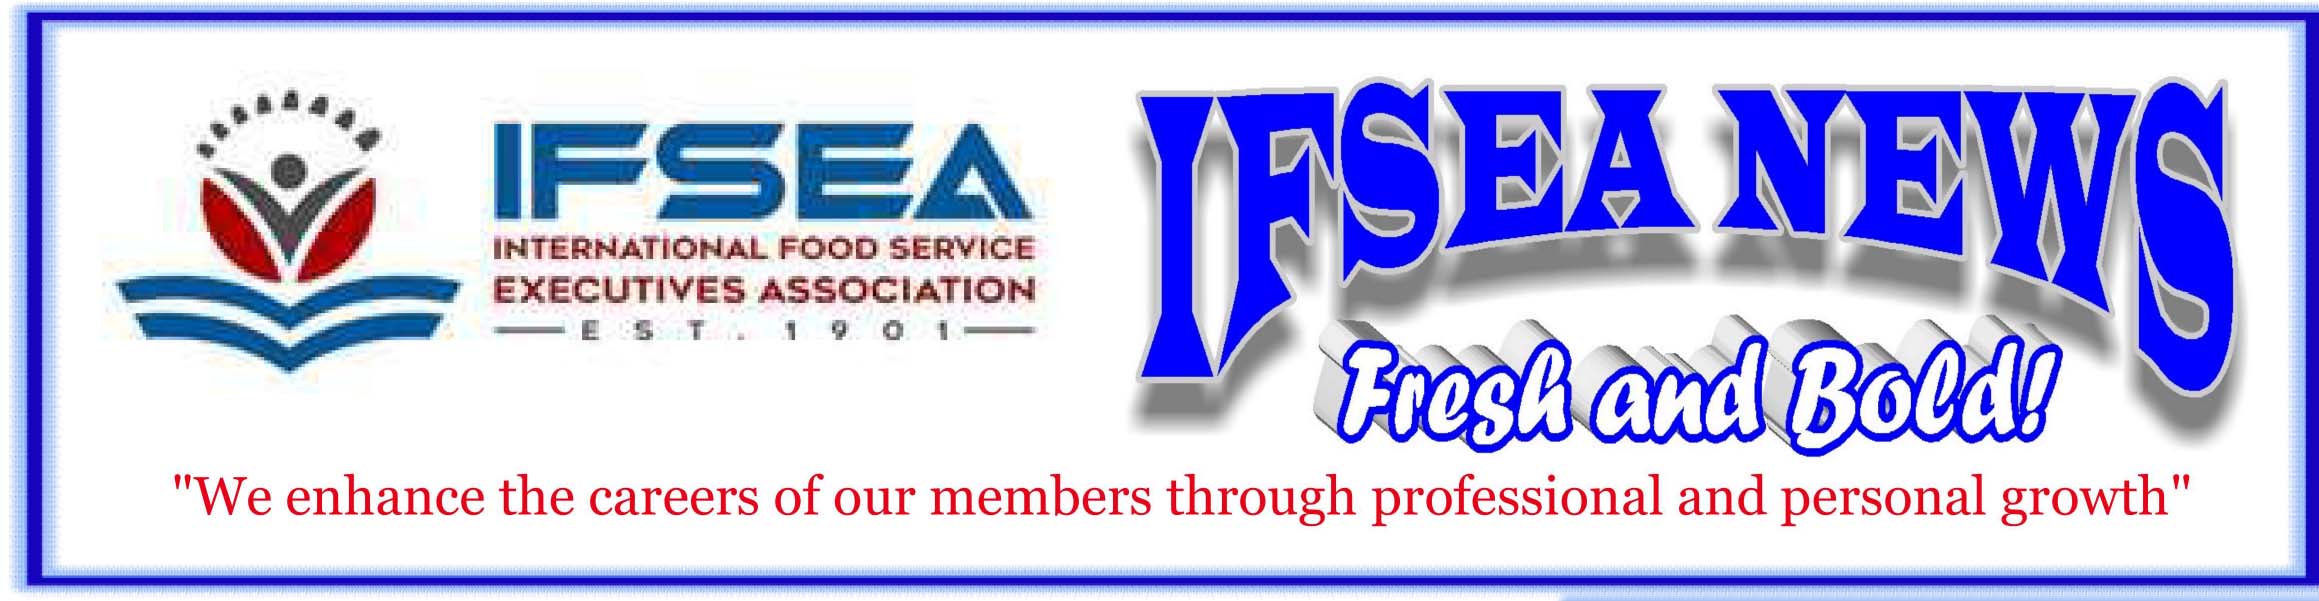 IFSEA News